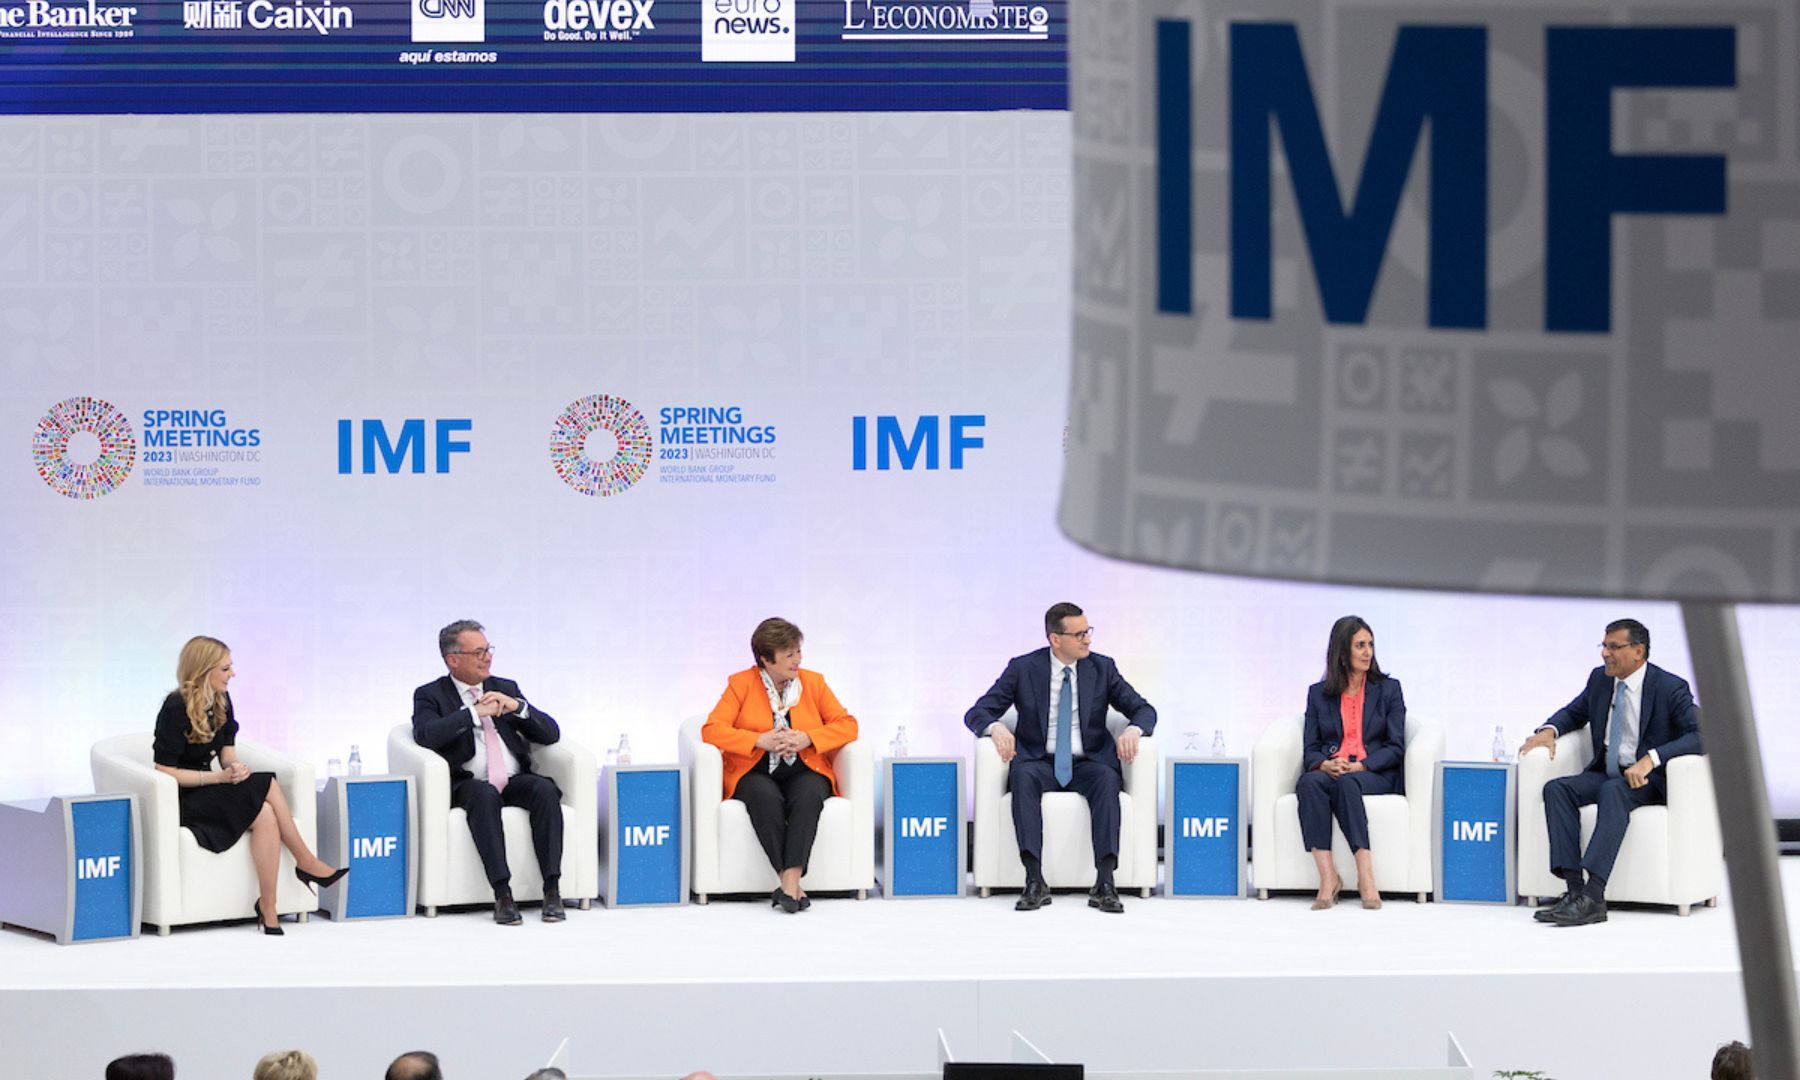 IMF Meetings Georgieva presents the Global Policy Agenda (GPA)